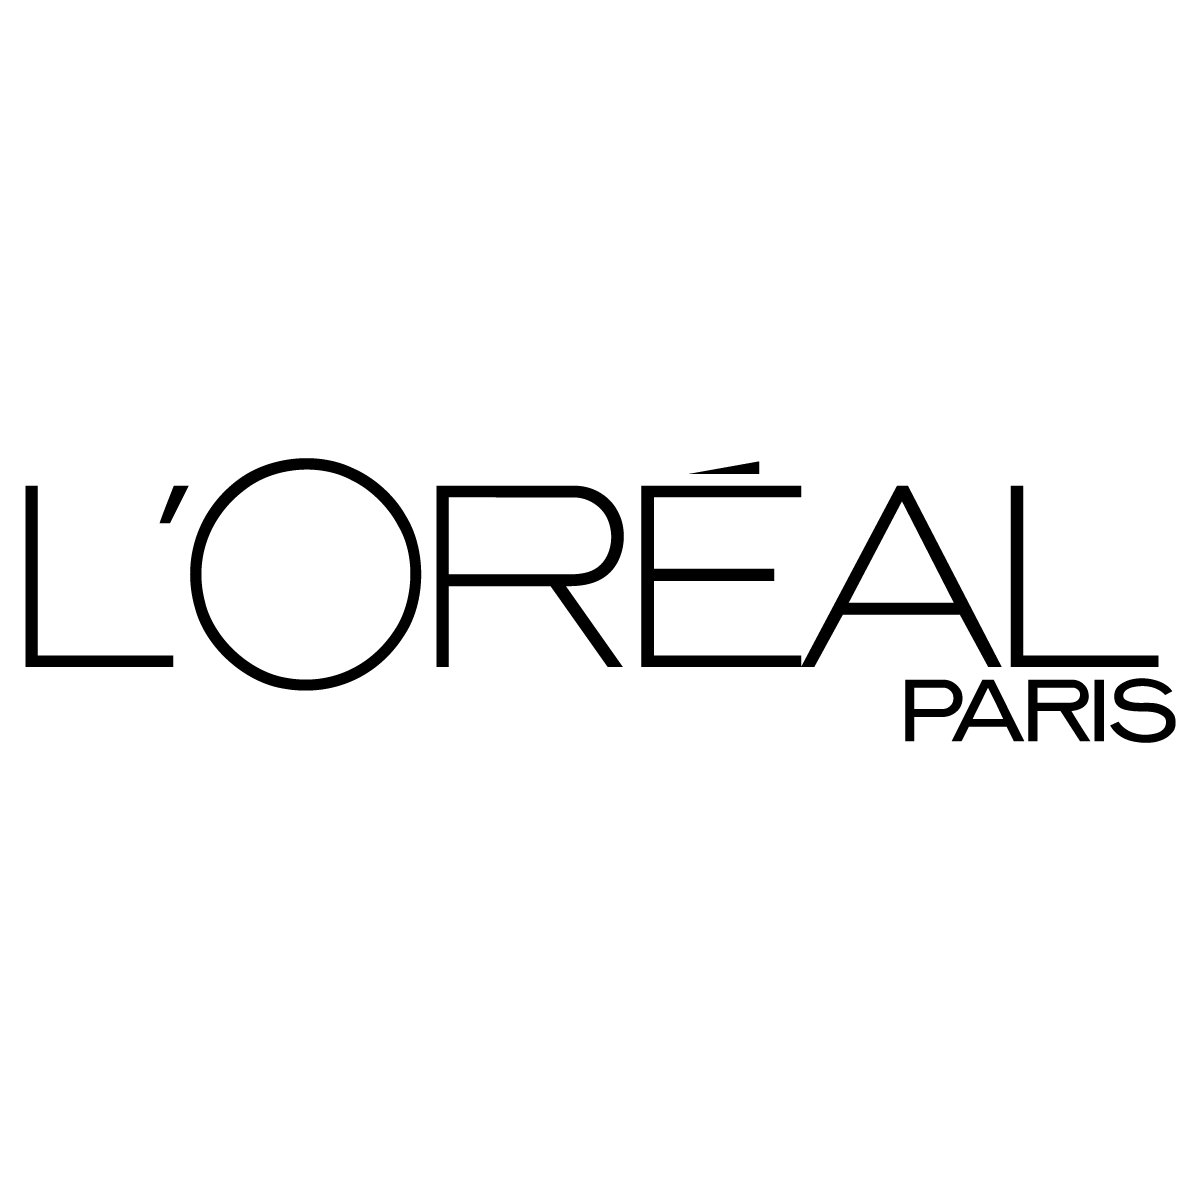 L'Oreal Paris Logo - Loreal Paris Logo Vector. Free Vector Silhouette Graphics AI EPS